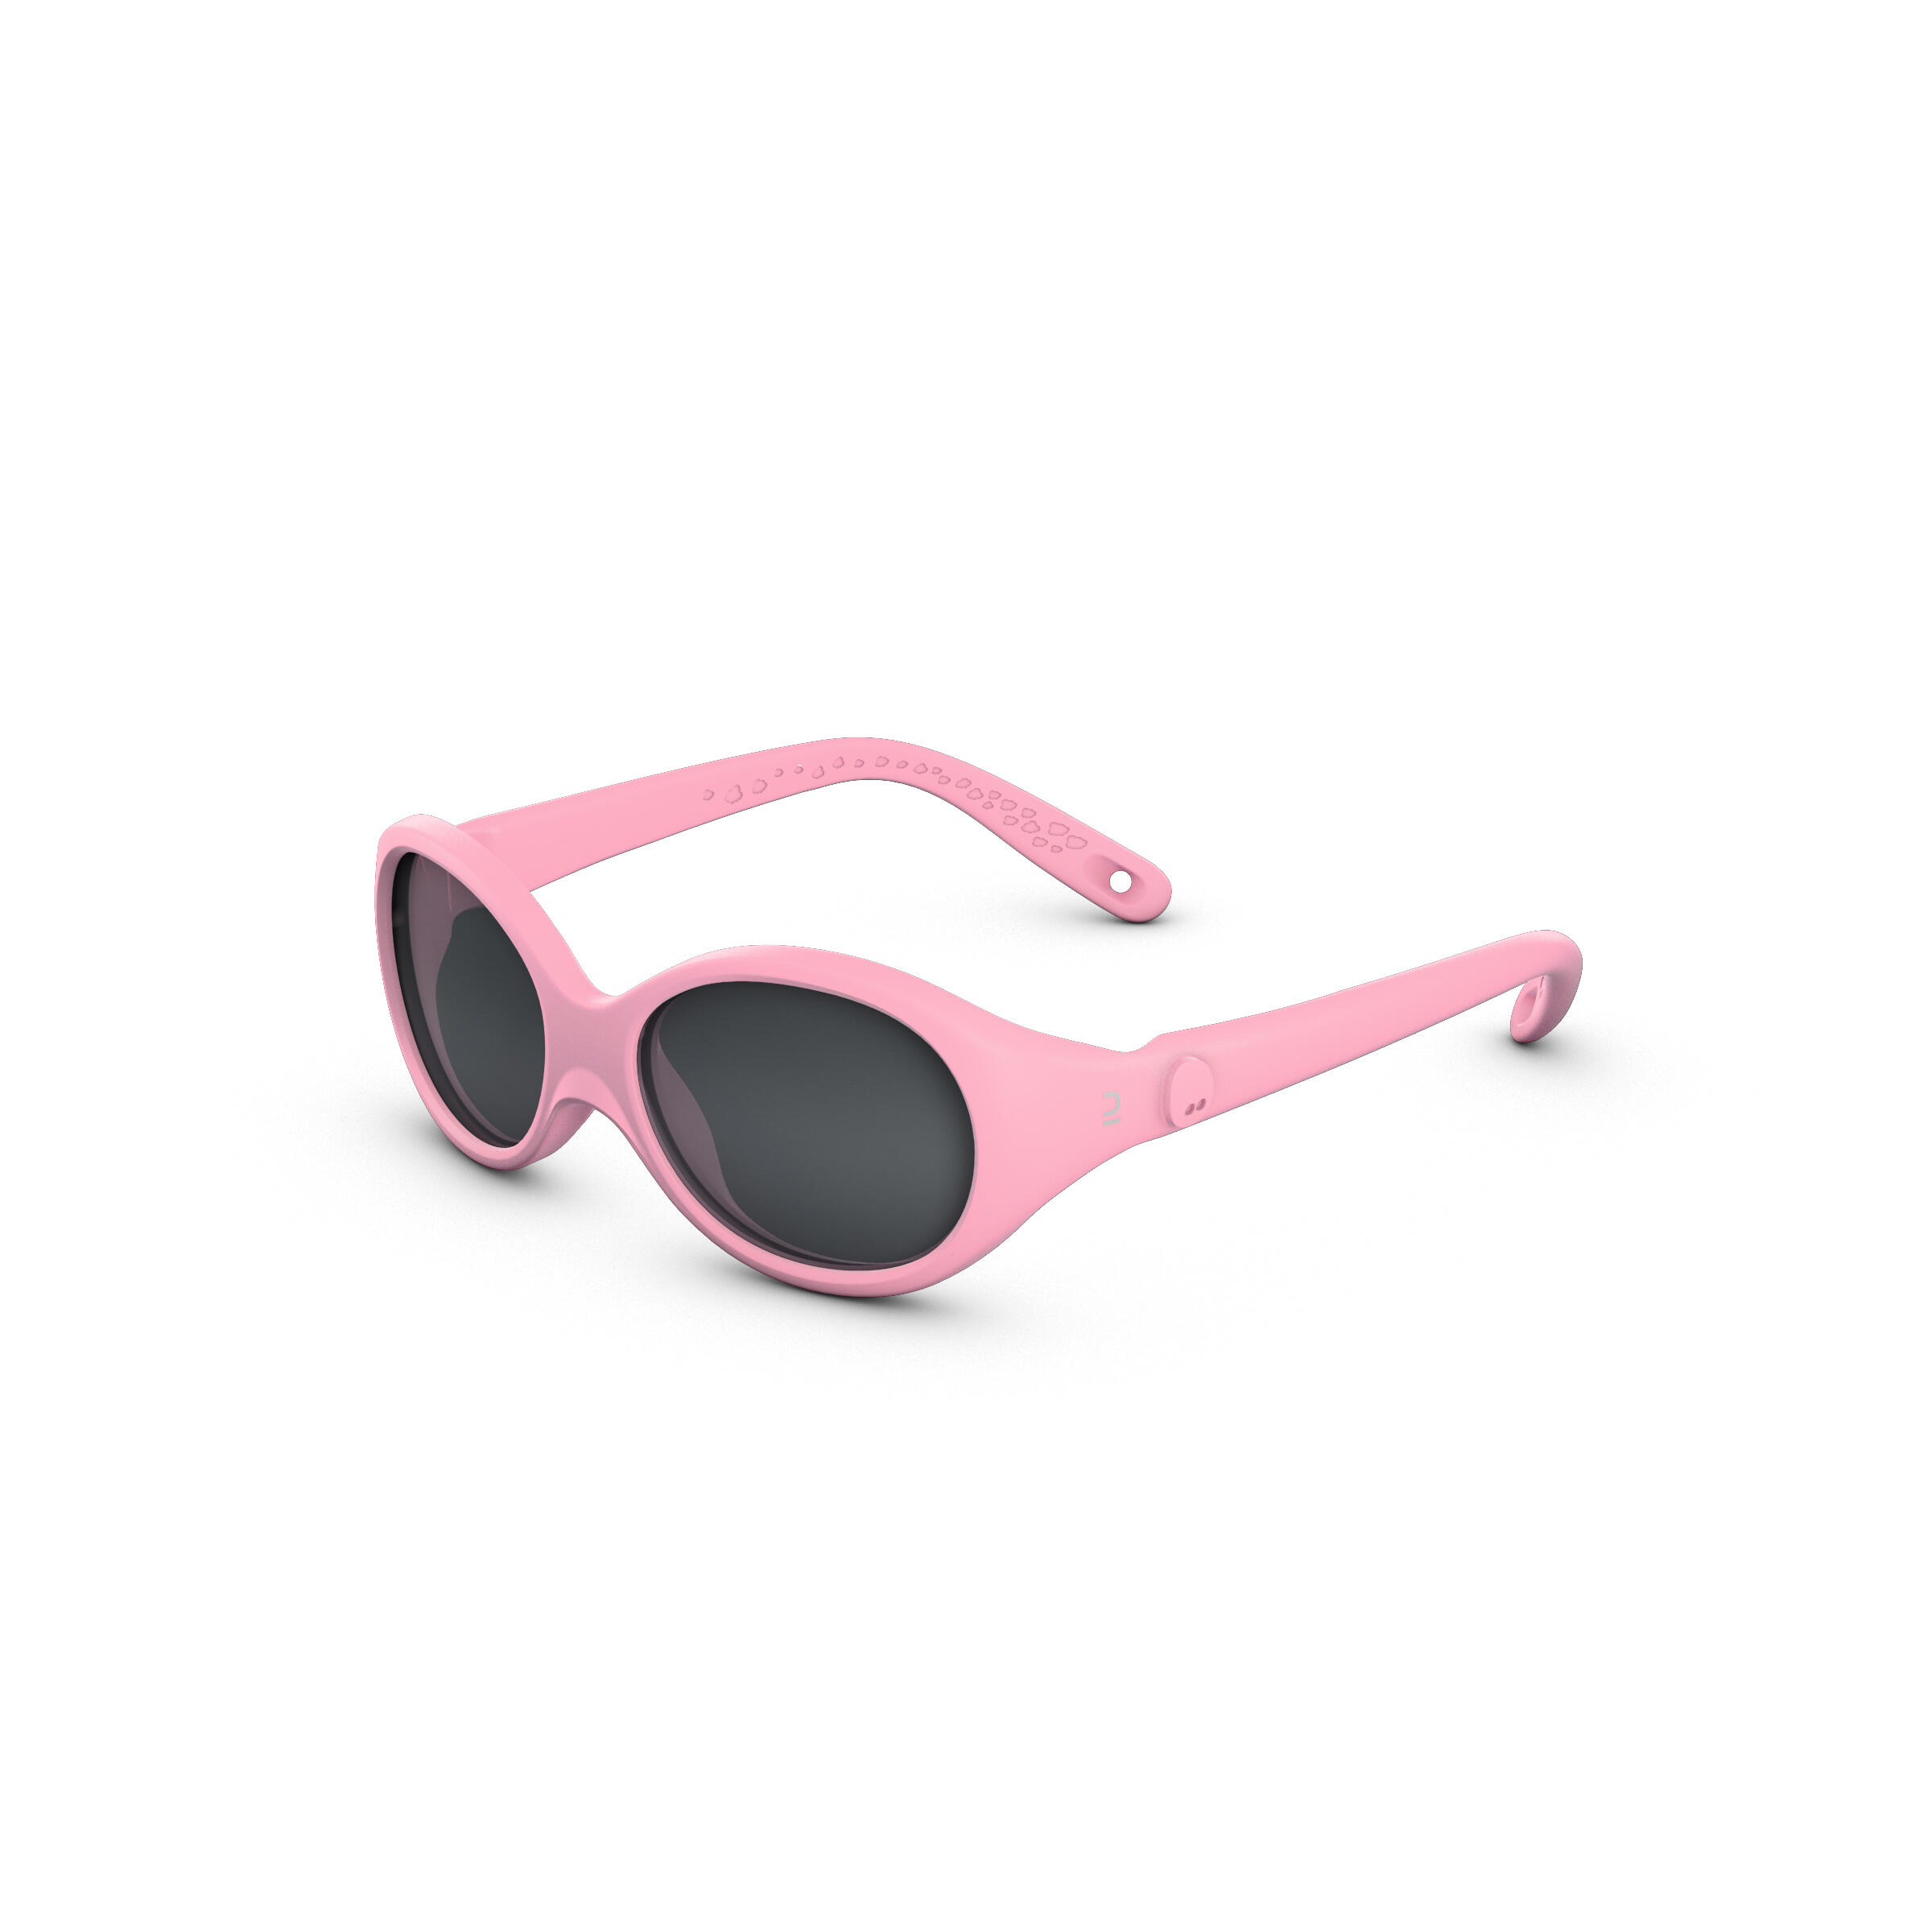 Pink cat-eye sunglasses